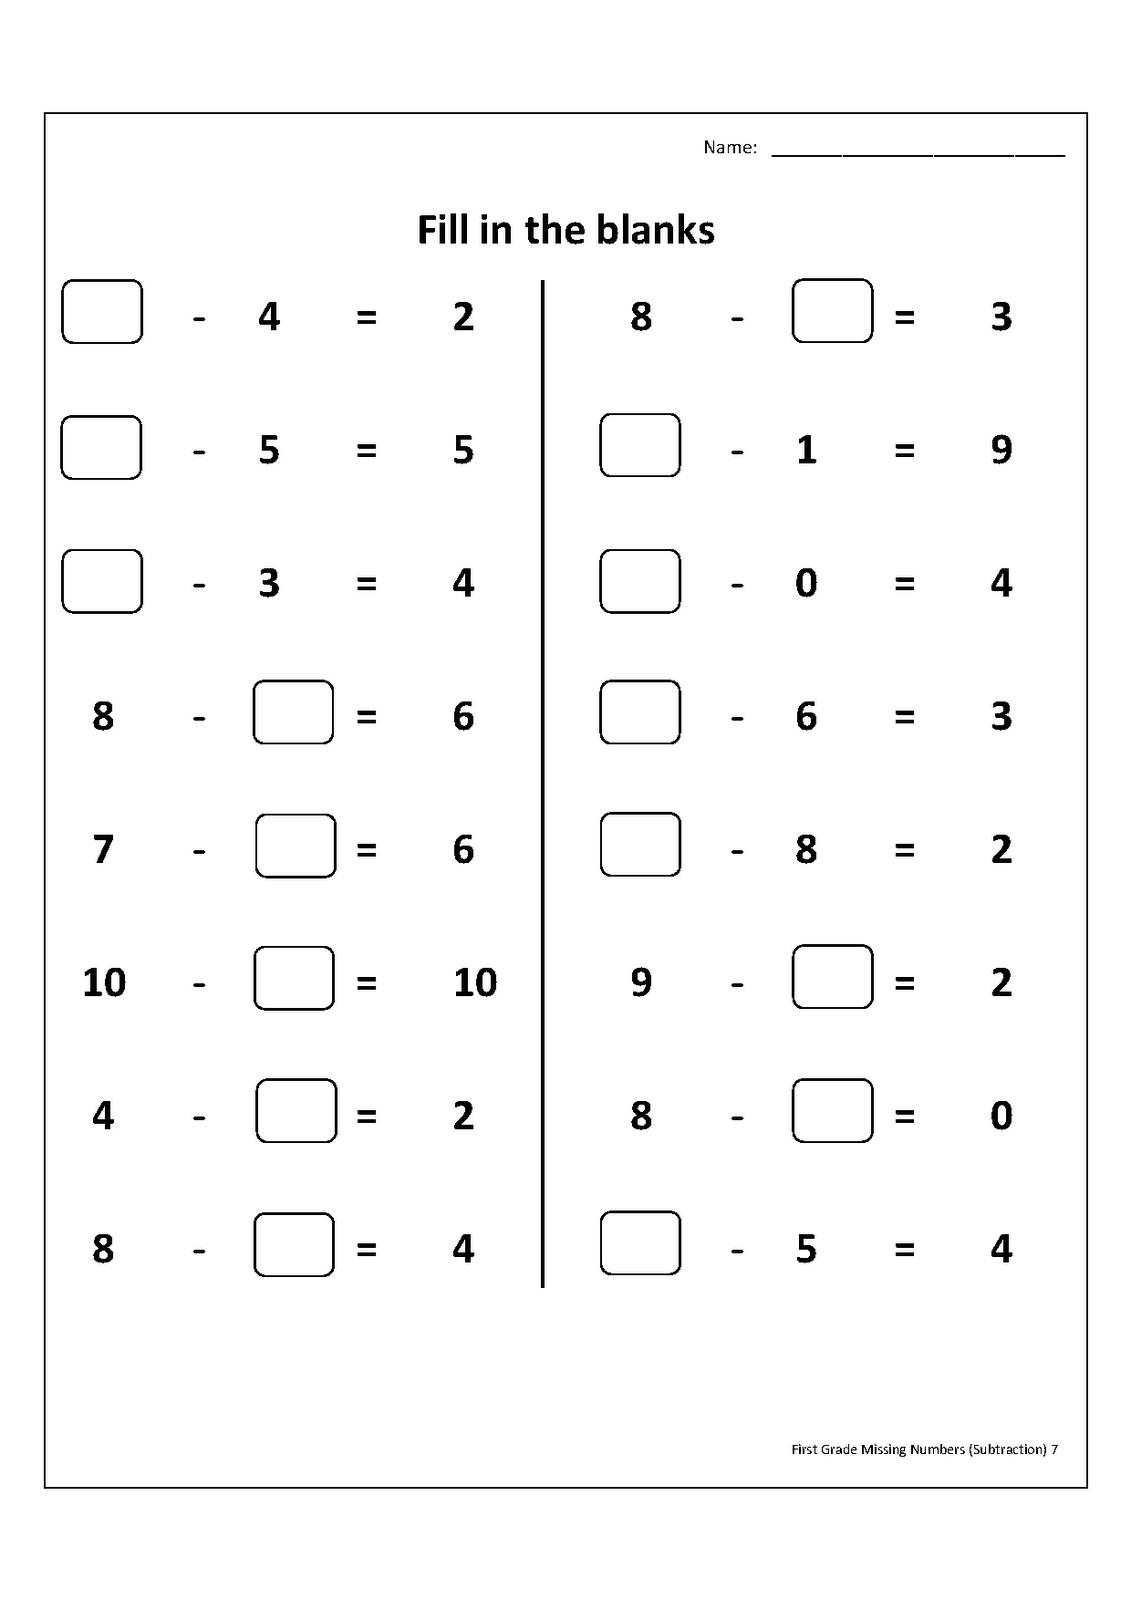 multiplication-worksheets-key-stage-1-printablemultiplication